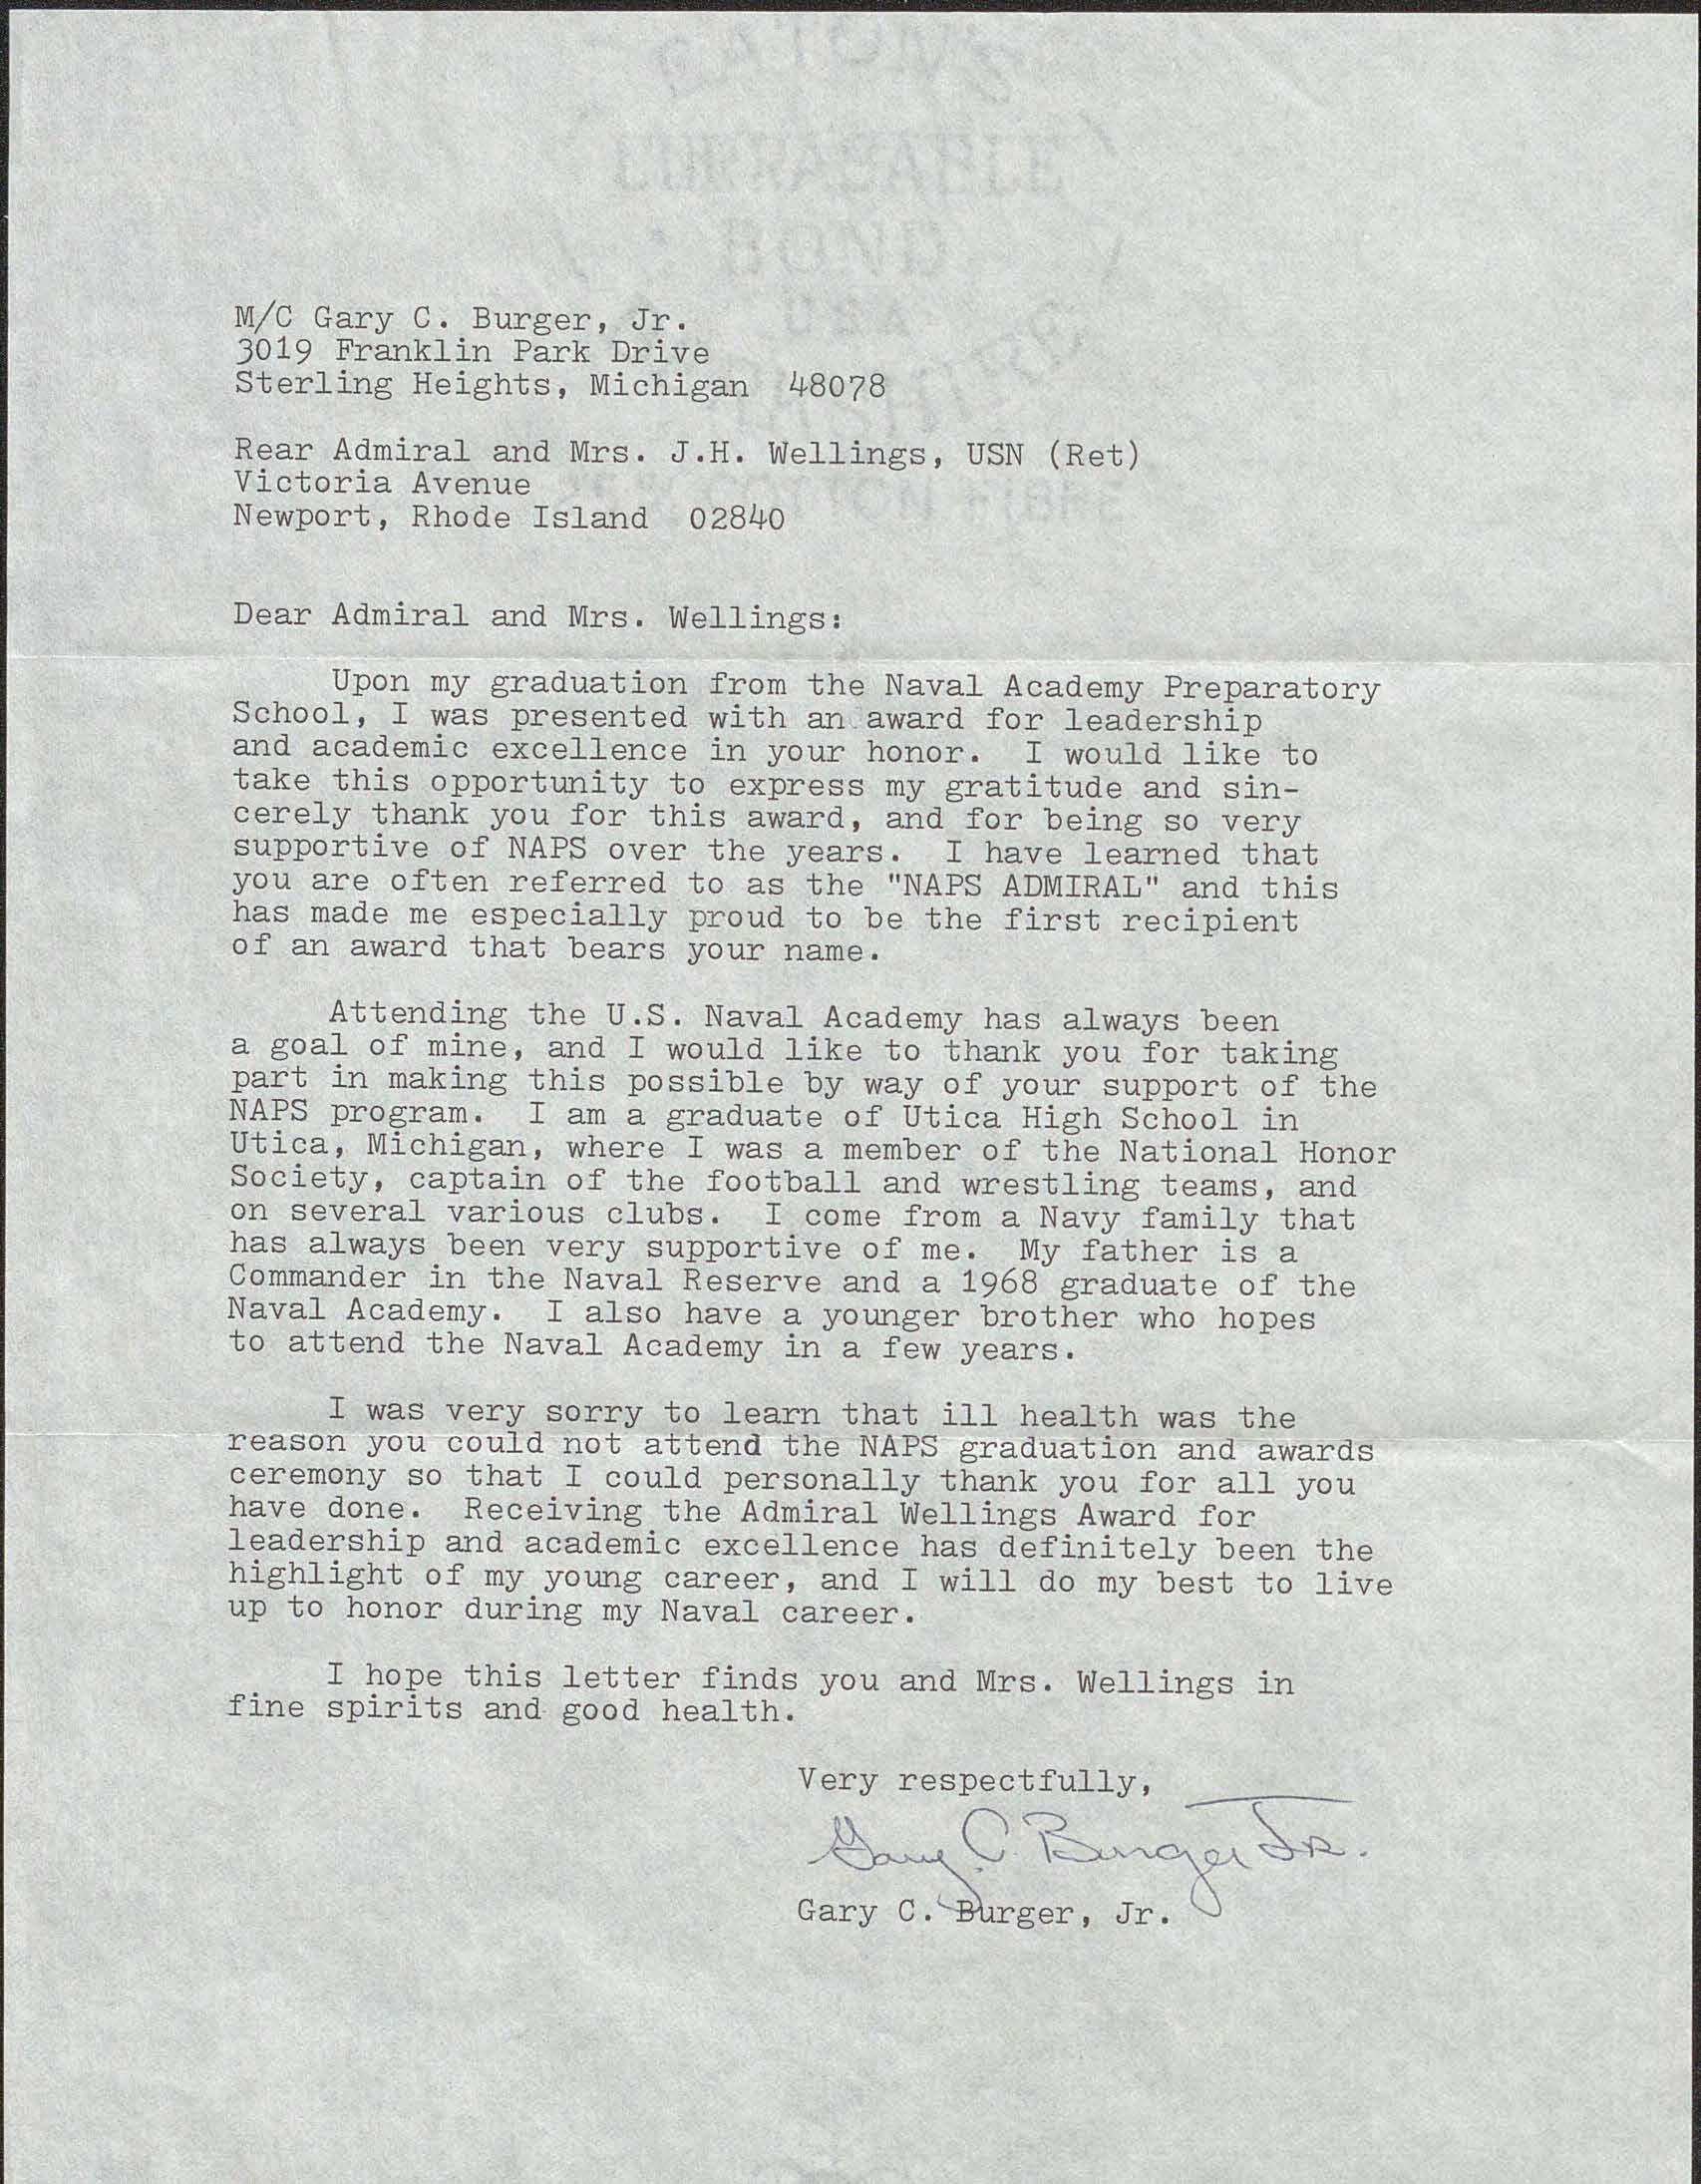 Letter from Gary C. Burger, Jr. to RADM and Mrs. Joseph J. Wellings